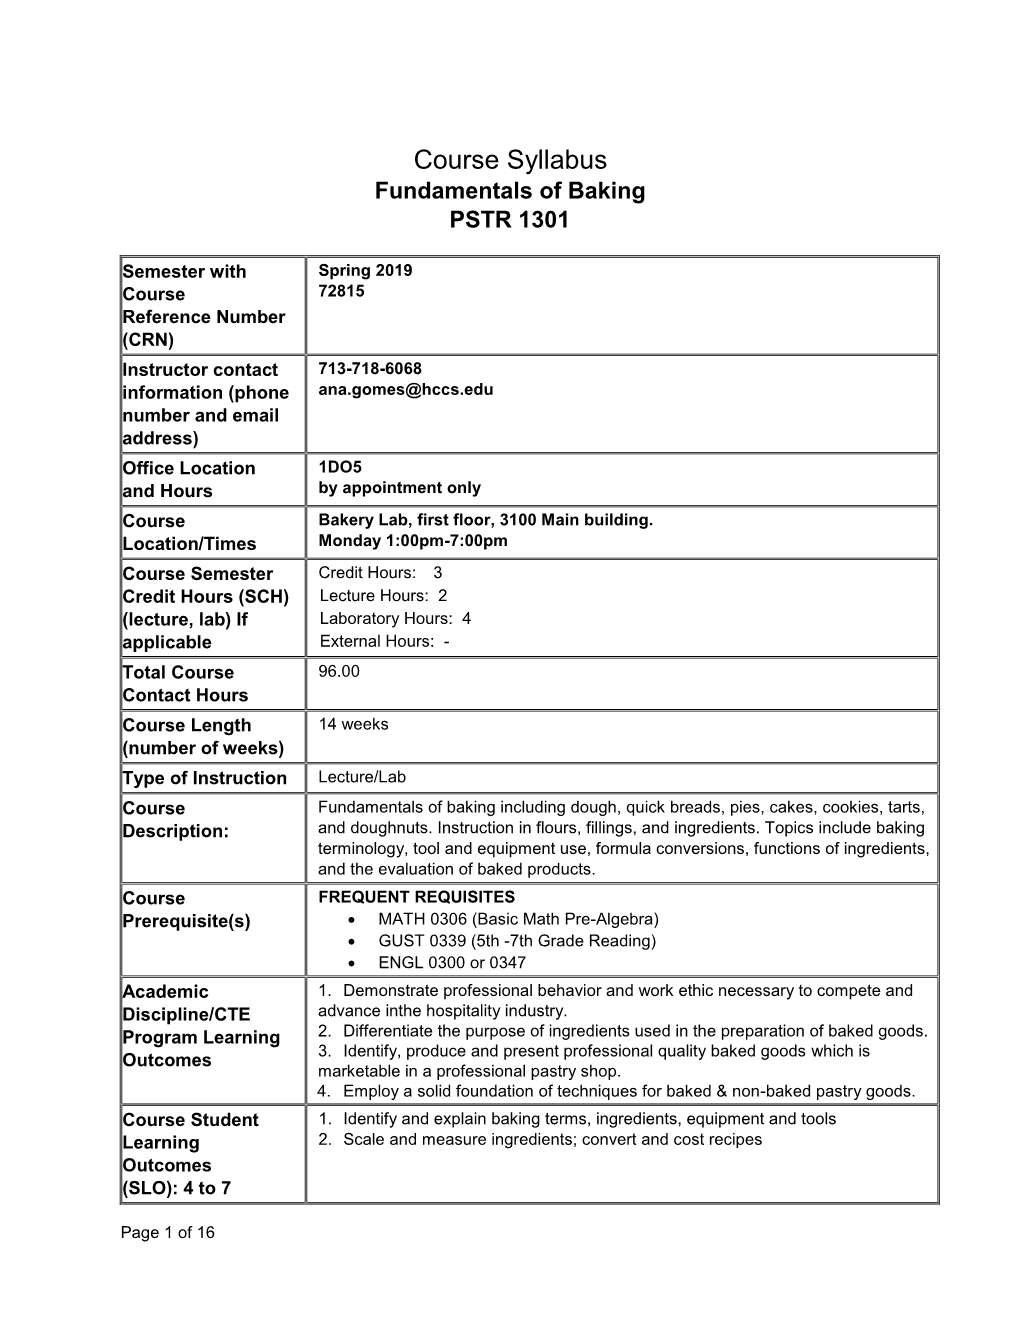 Course Syllabus Fundamentals of Baking PSTR 1301